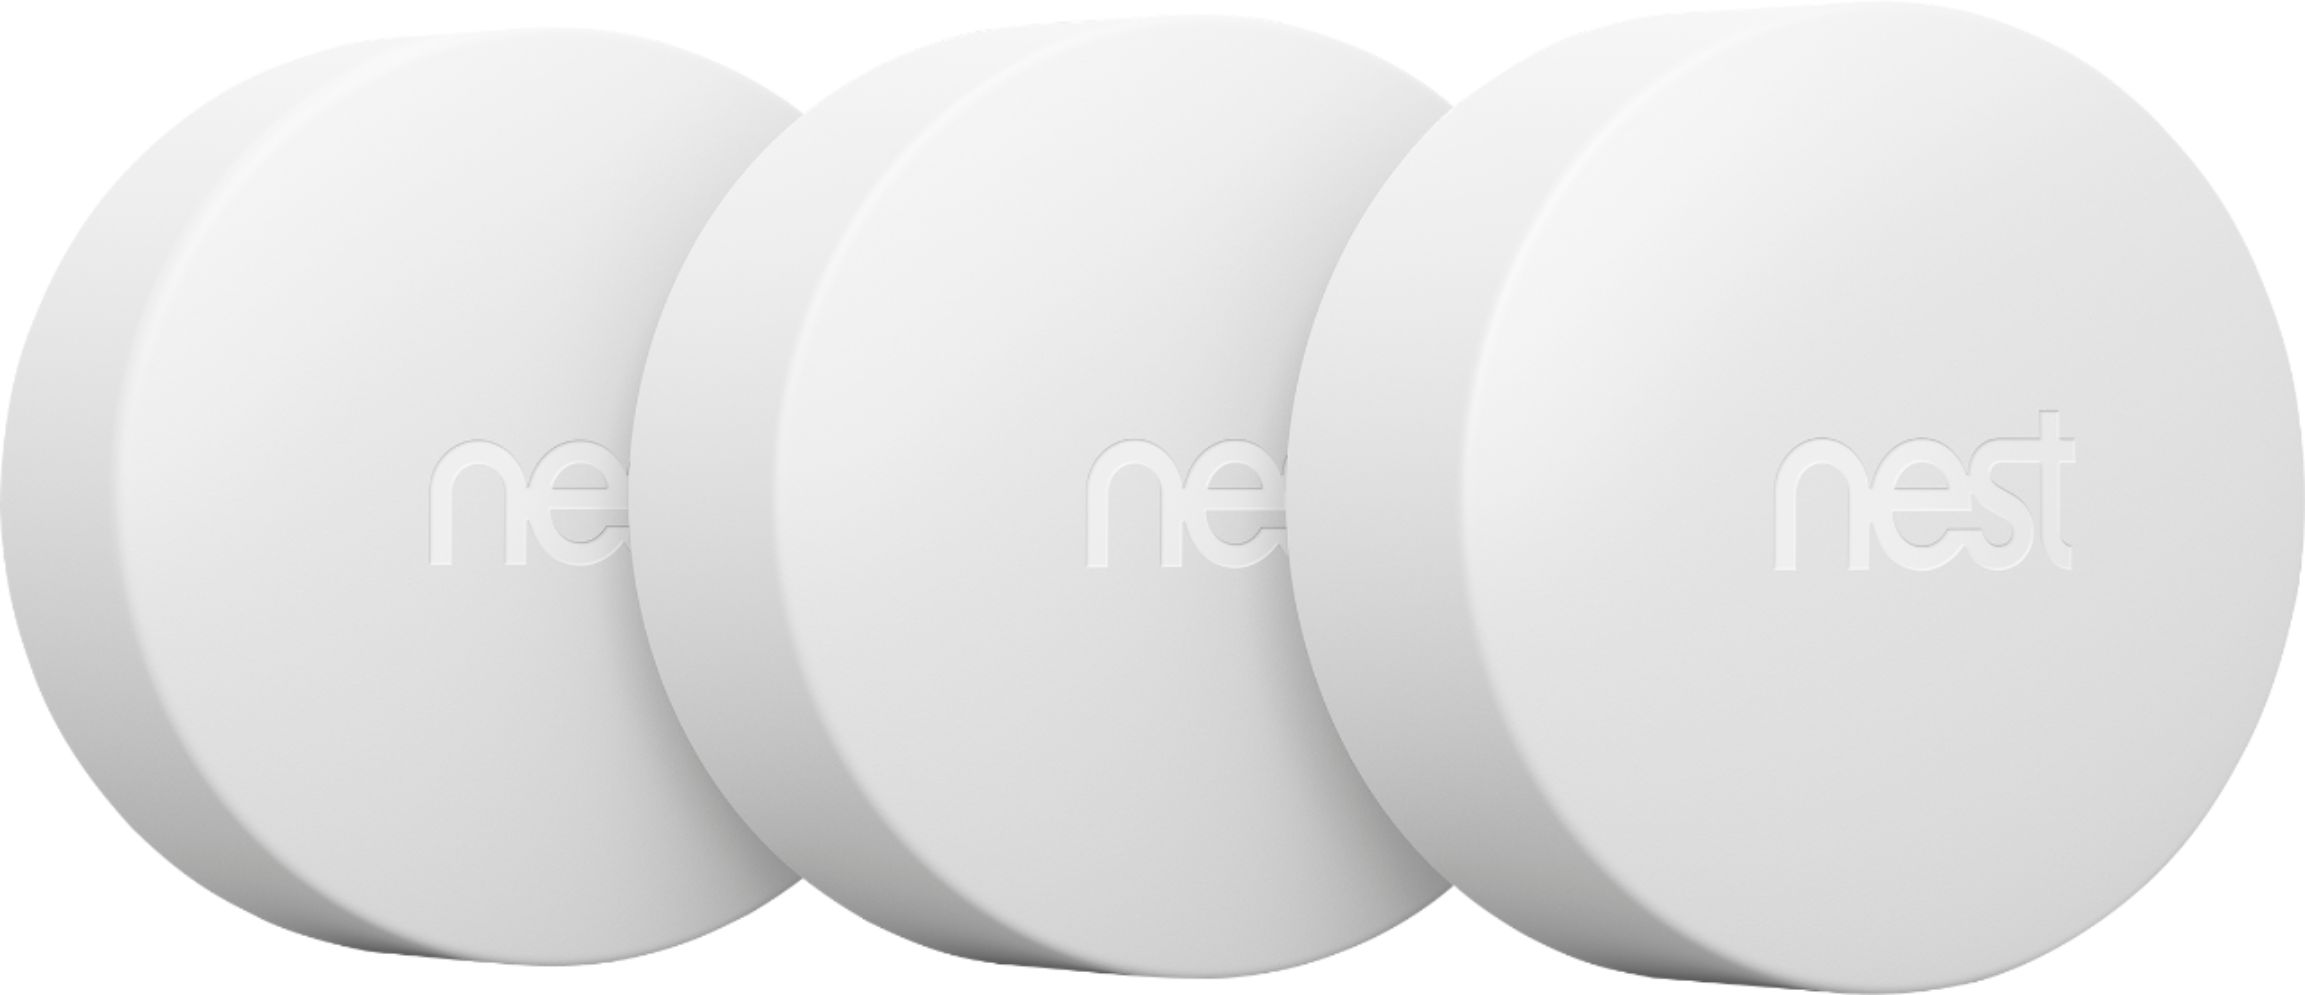 Google nest thermostat remote sensors